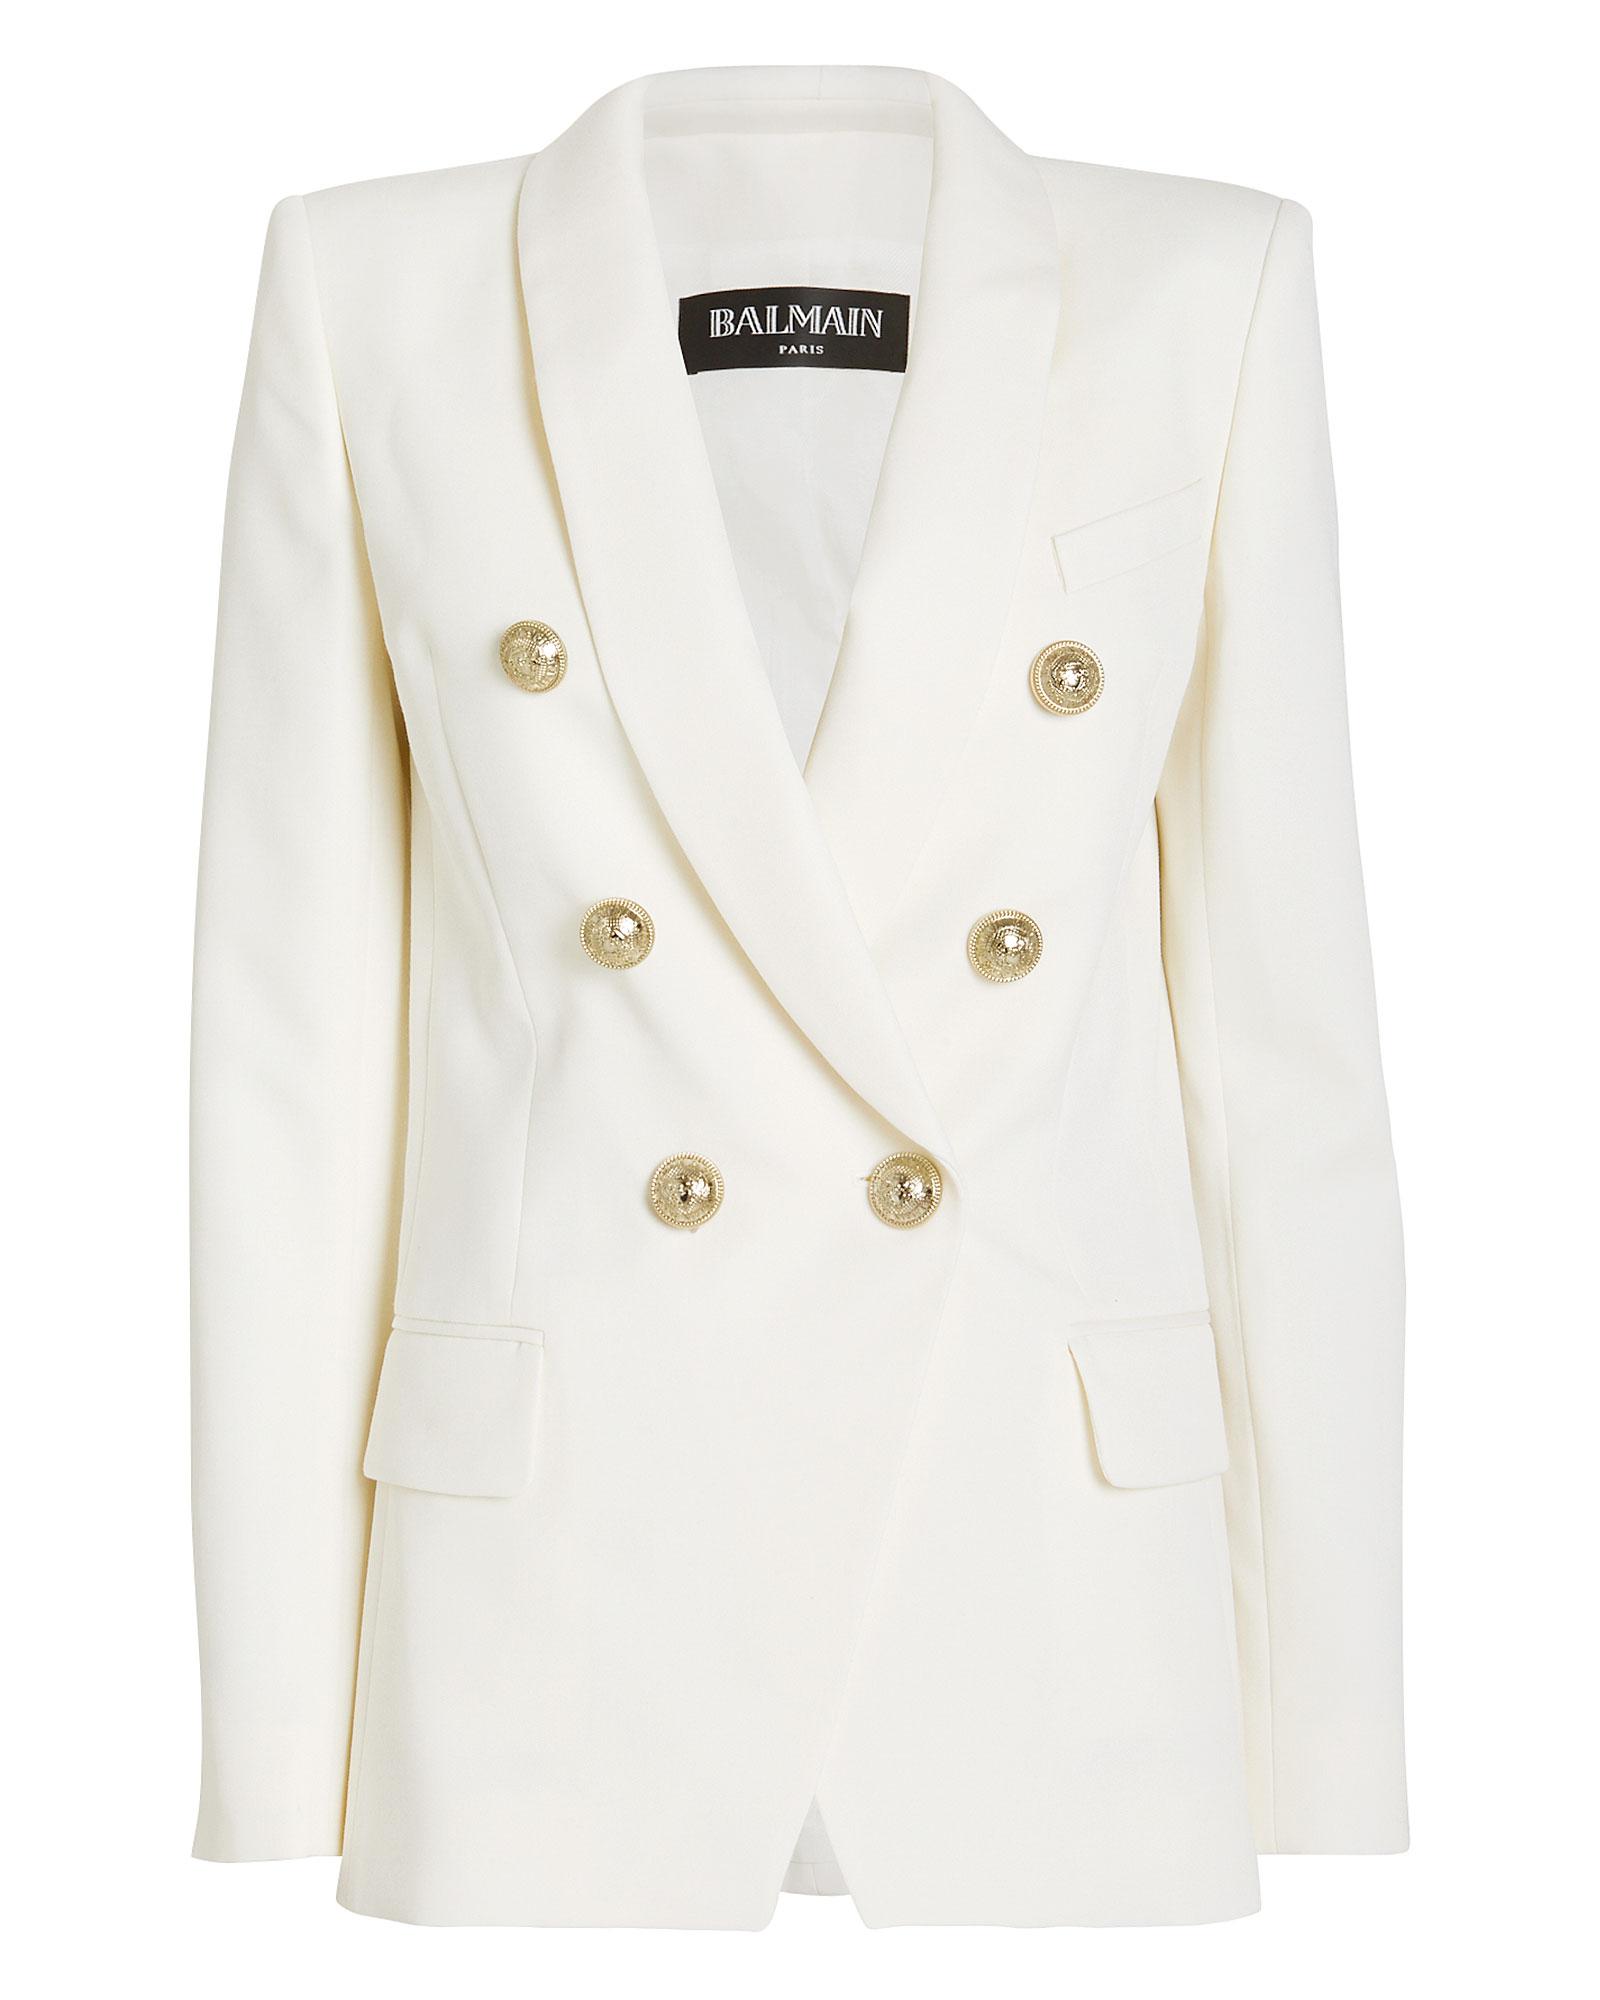 Balmain Tweed Blazer in Ecru (White) - Save 61% - Lyst